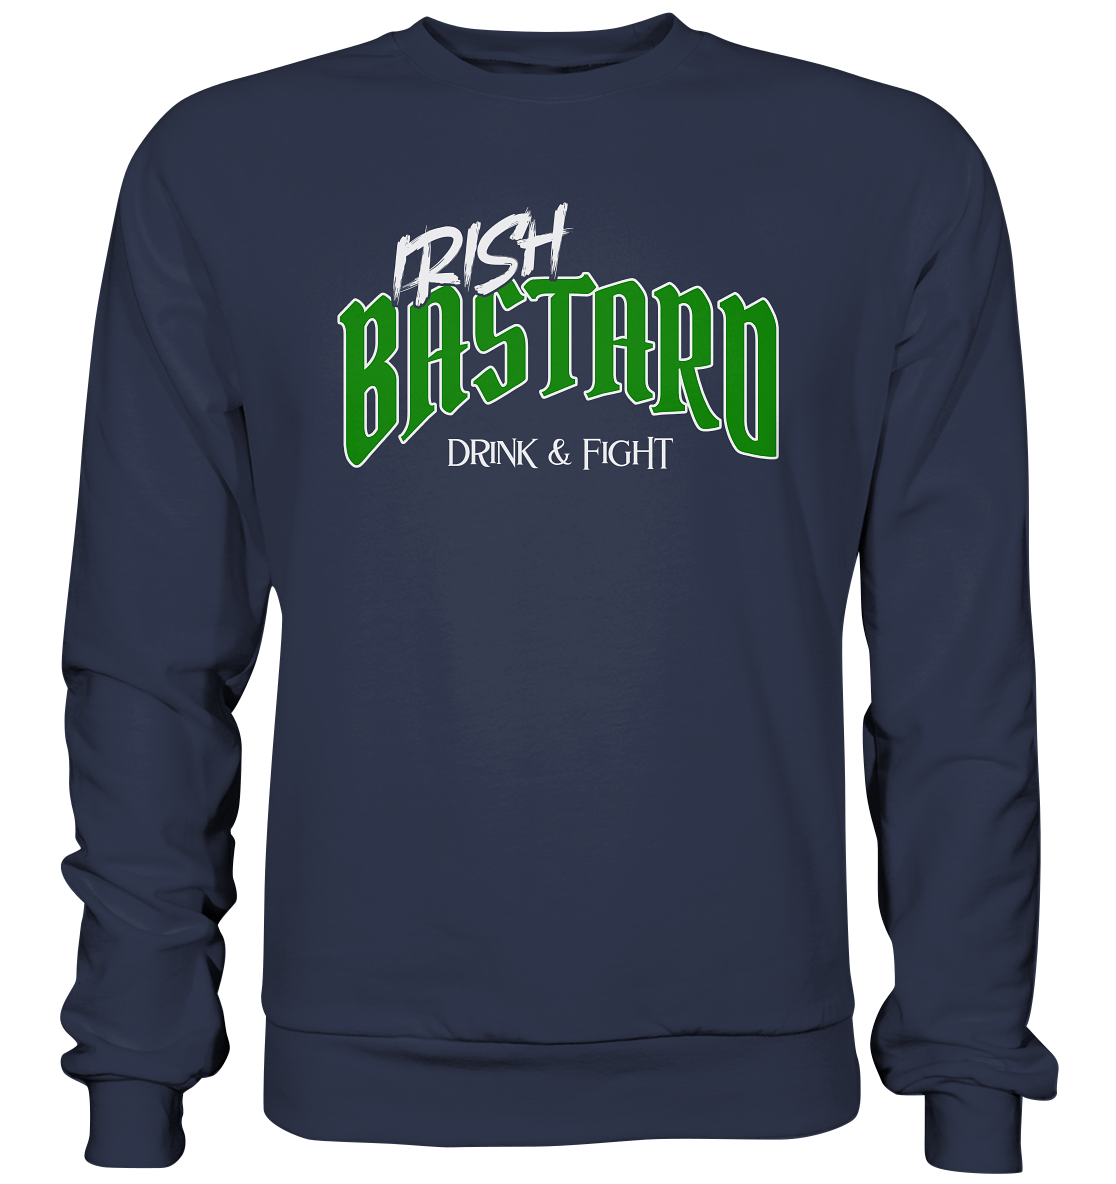 Irish Bastard "Drink & Fight" - Premium Sweatshirt